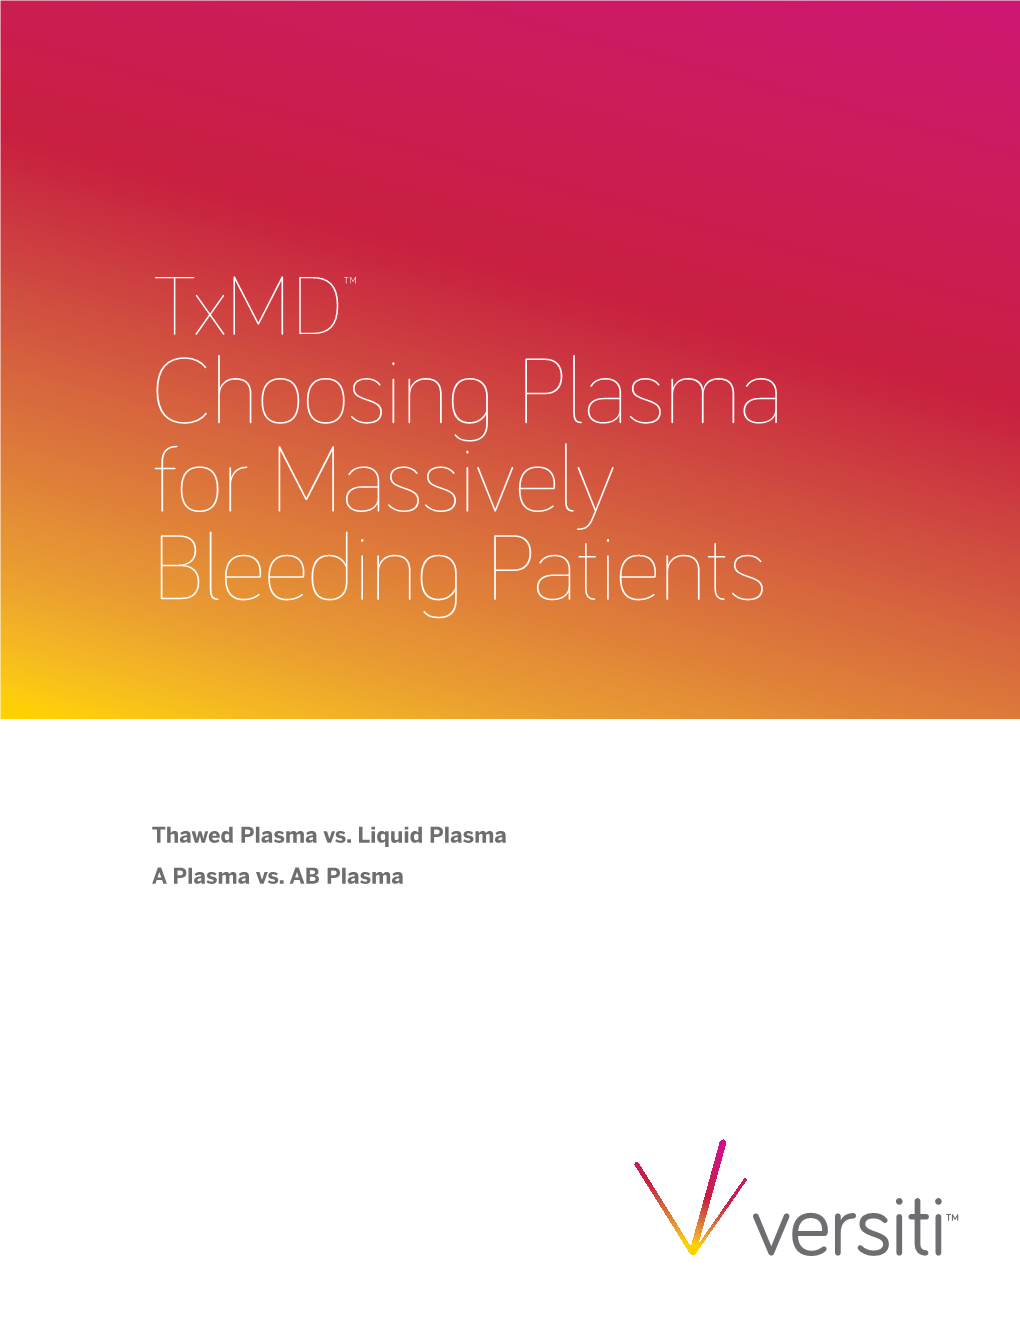 Txmd™ Choosing Plasma for Massively Bleeding Patients Whitepaper